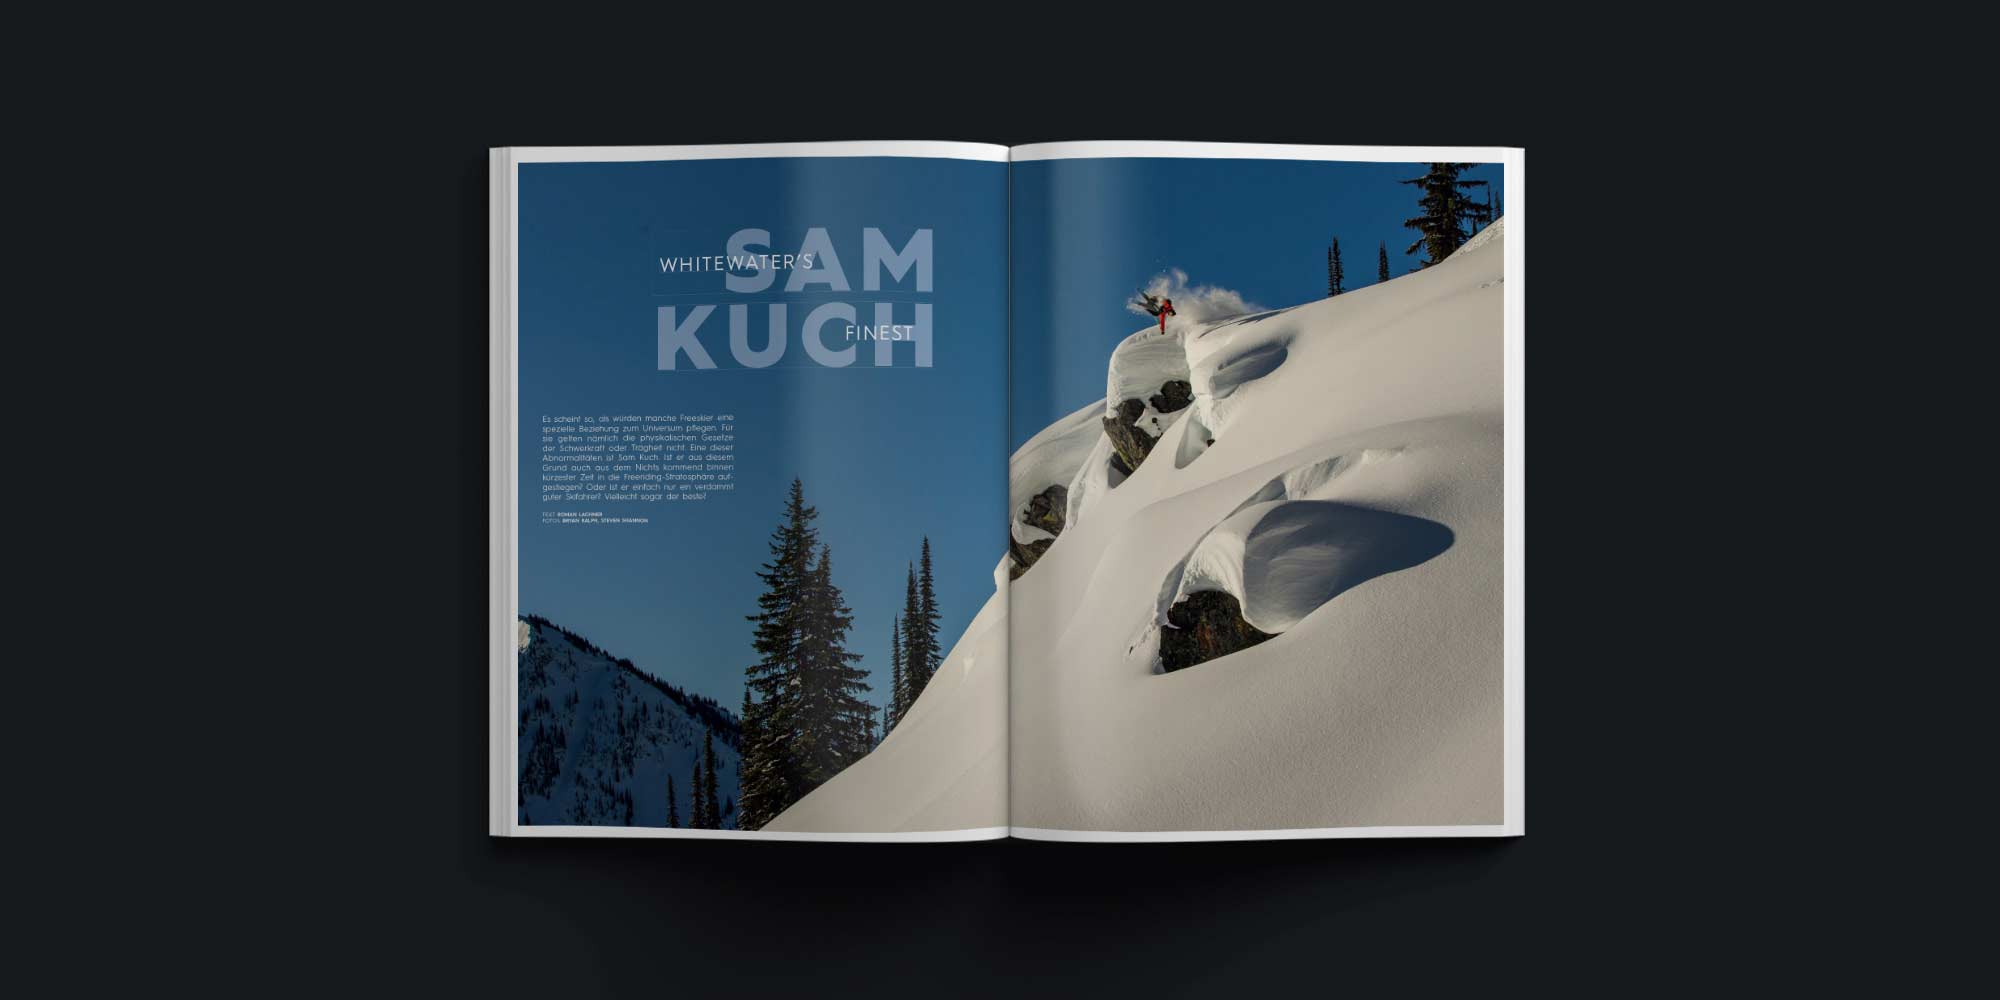 PRIME Skiing #37 – Artikel Highlights: Sam Kuch – Whitewater’s Finest